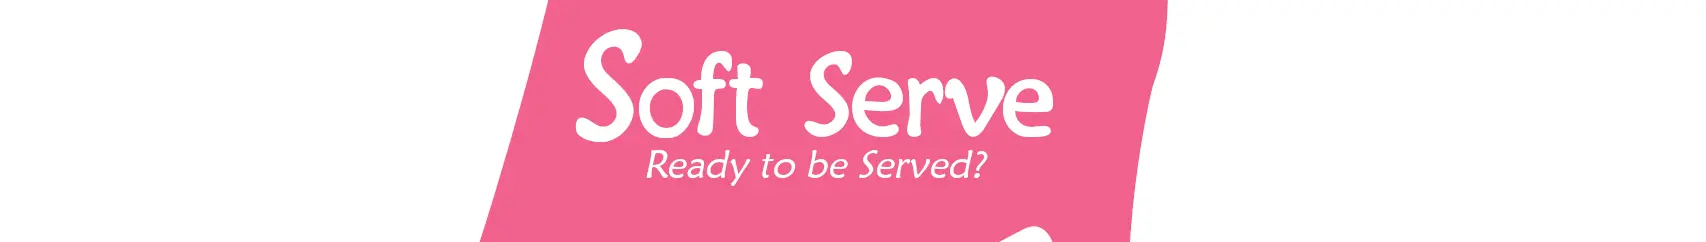 Soft Serve [v1.0 Final] main image